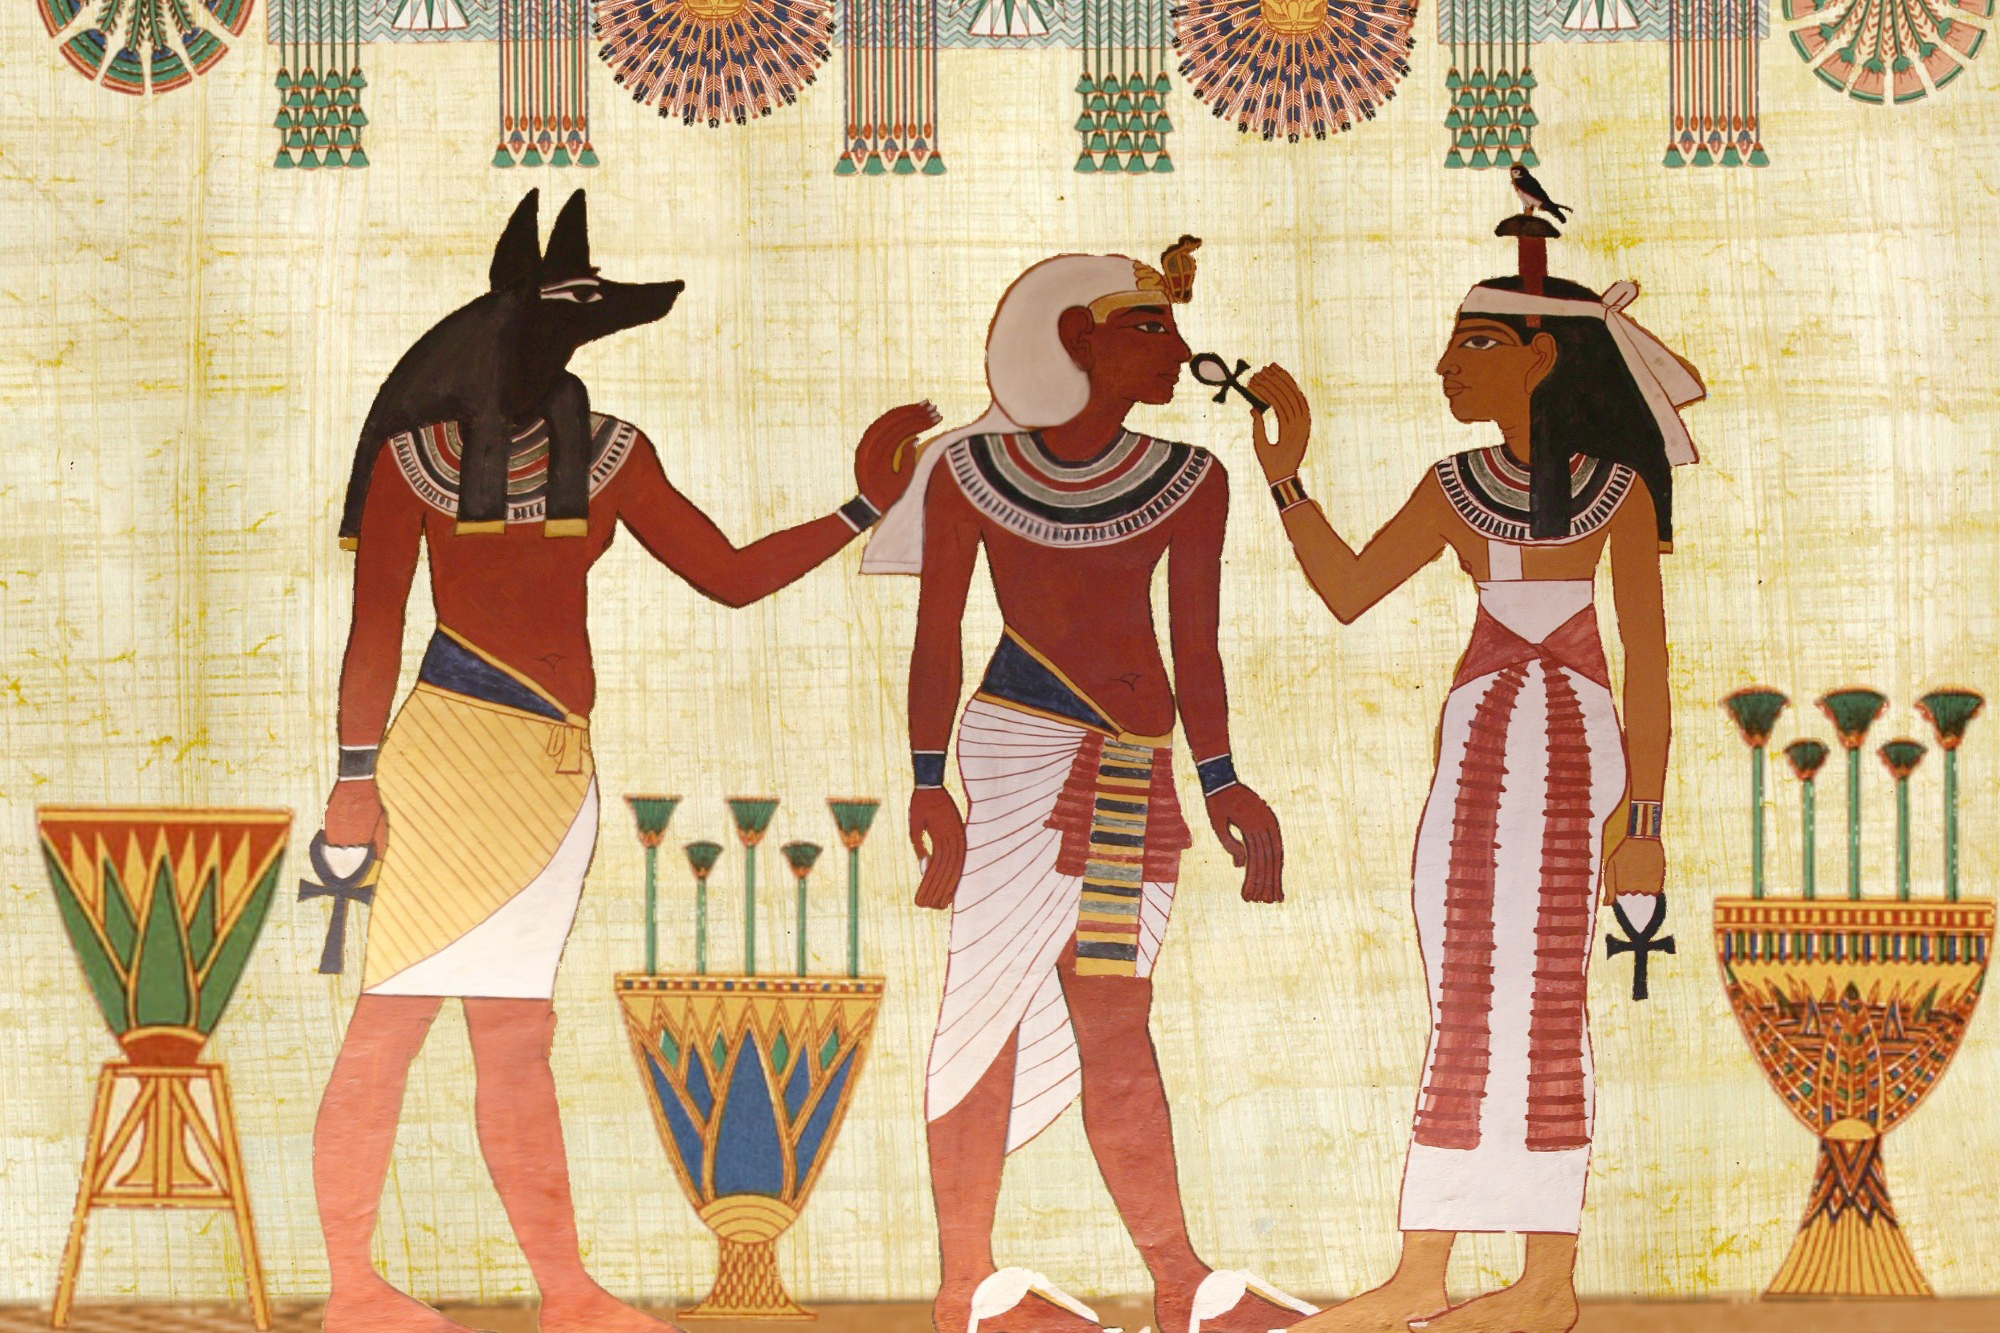 Linen garments were worn by Egyptians as a cool garment